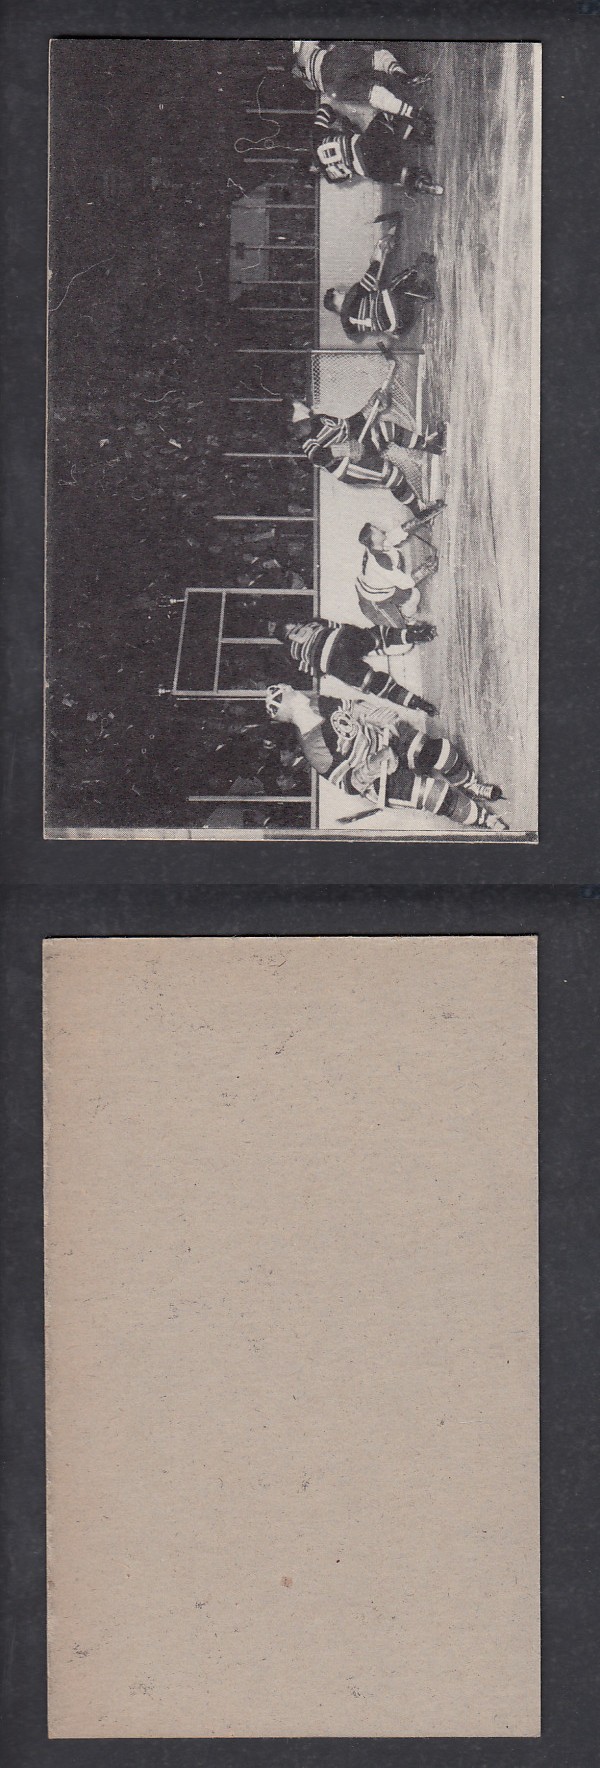 1948-52 EXHIBITS HOCKEY CARD 5 GEOFFRION photo